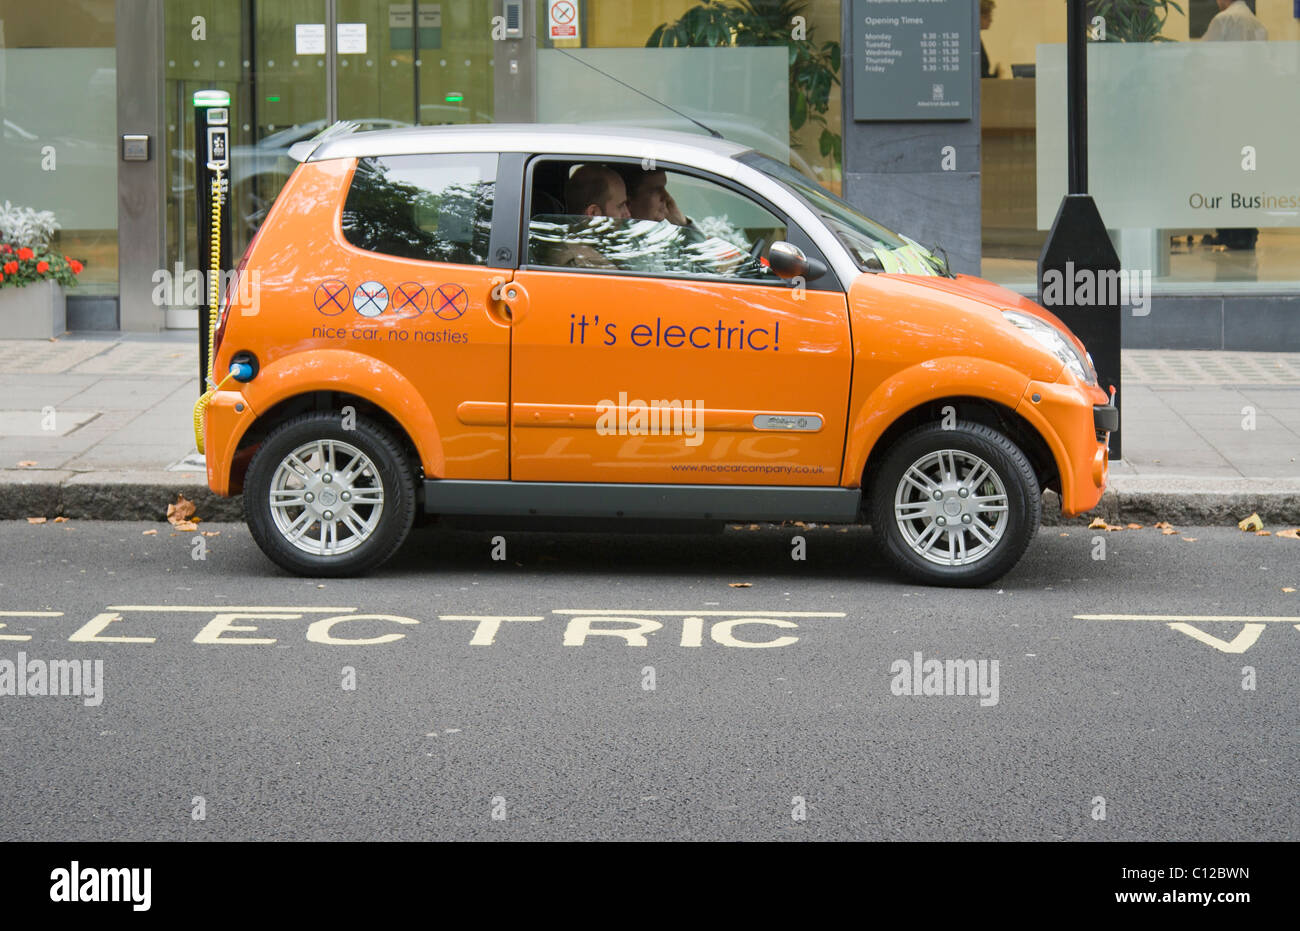 https://c8.alamy.com/comp/C12BWN/an-electric-car-recharging-at-an-electrobay-london-uk-C12BWN.jpg